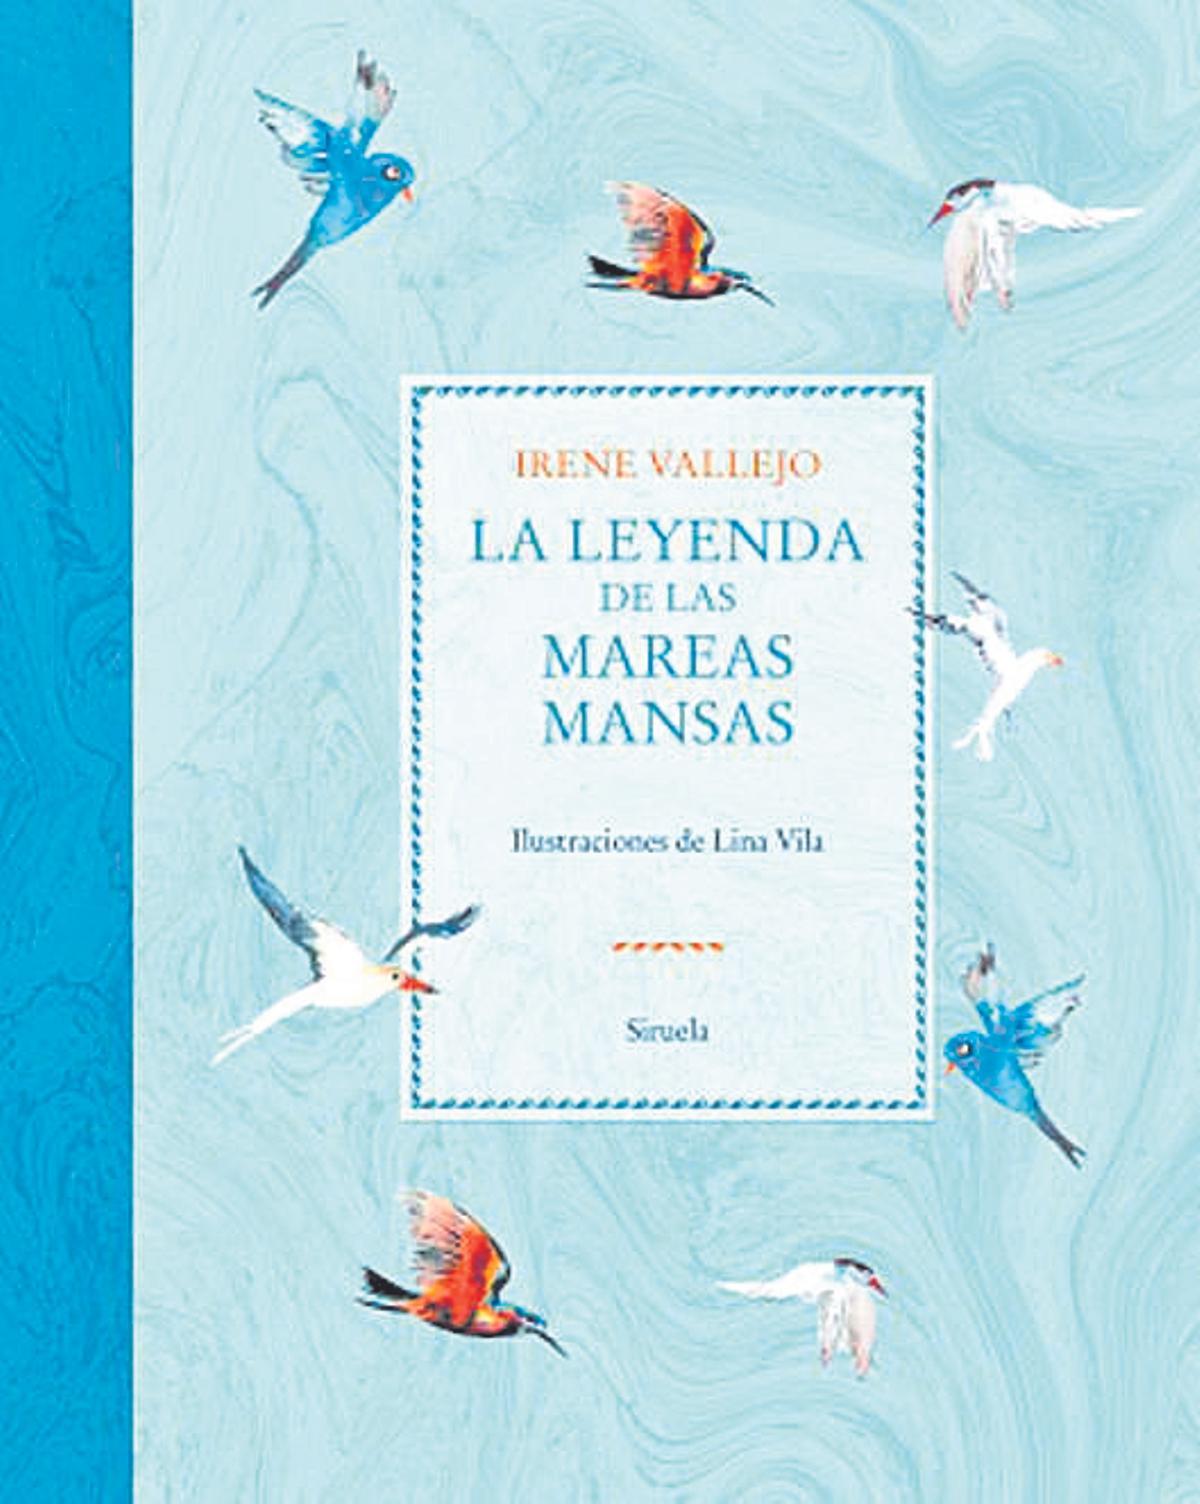 Irene Vallejo/Lina Vila  La leyenda de las mareas mansas  Siruela   64 páginas / 19,95 euros